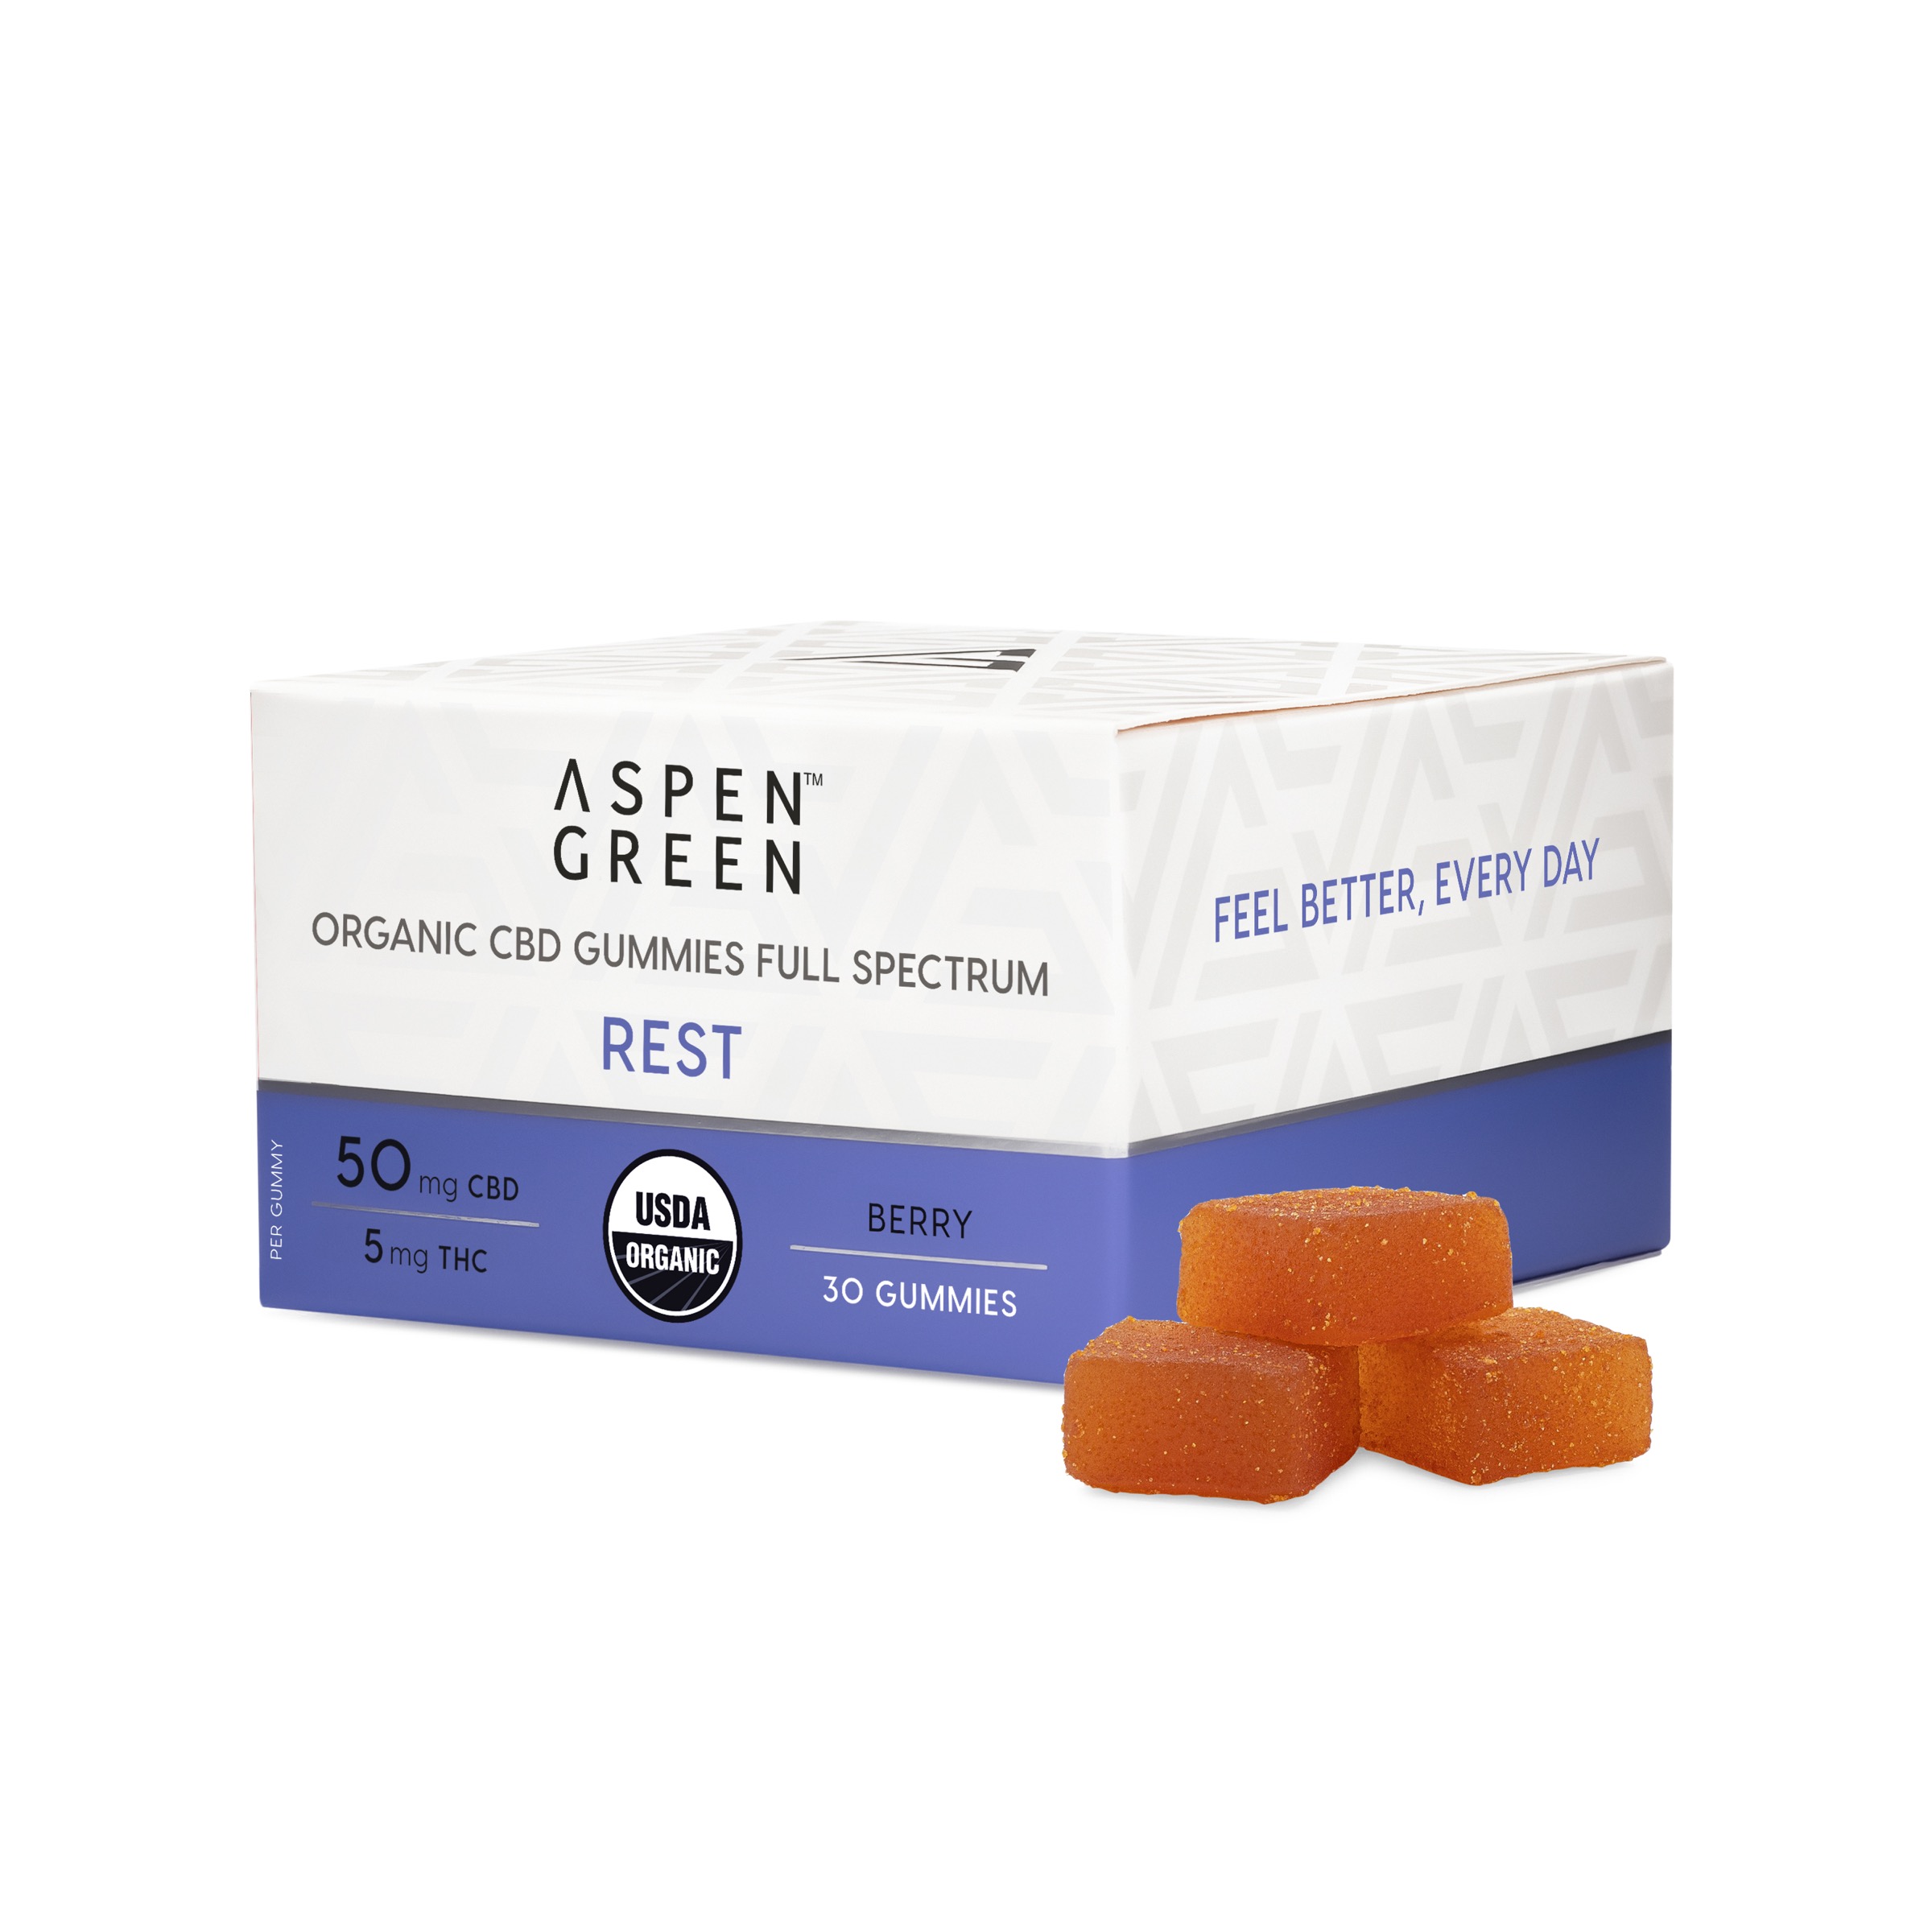 Aspen Green USDA Certified Organic CBD Gummies box with gummies, Rest (50mg CBD), Berry Flavor